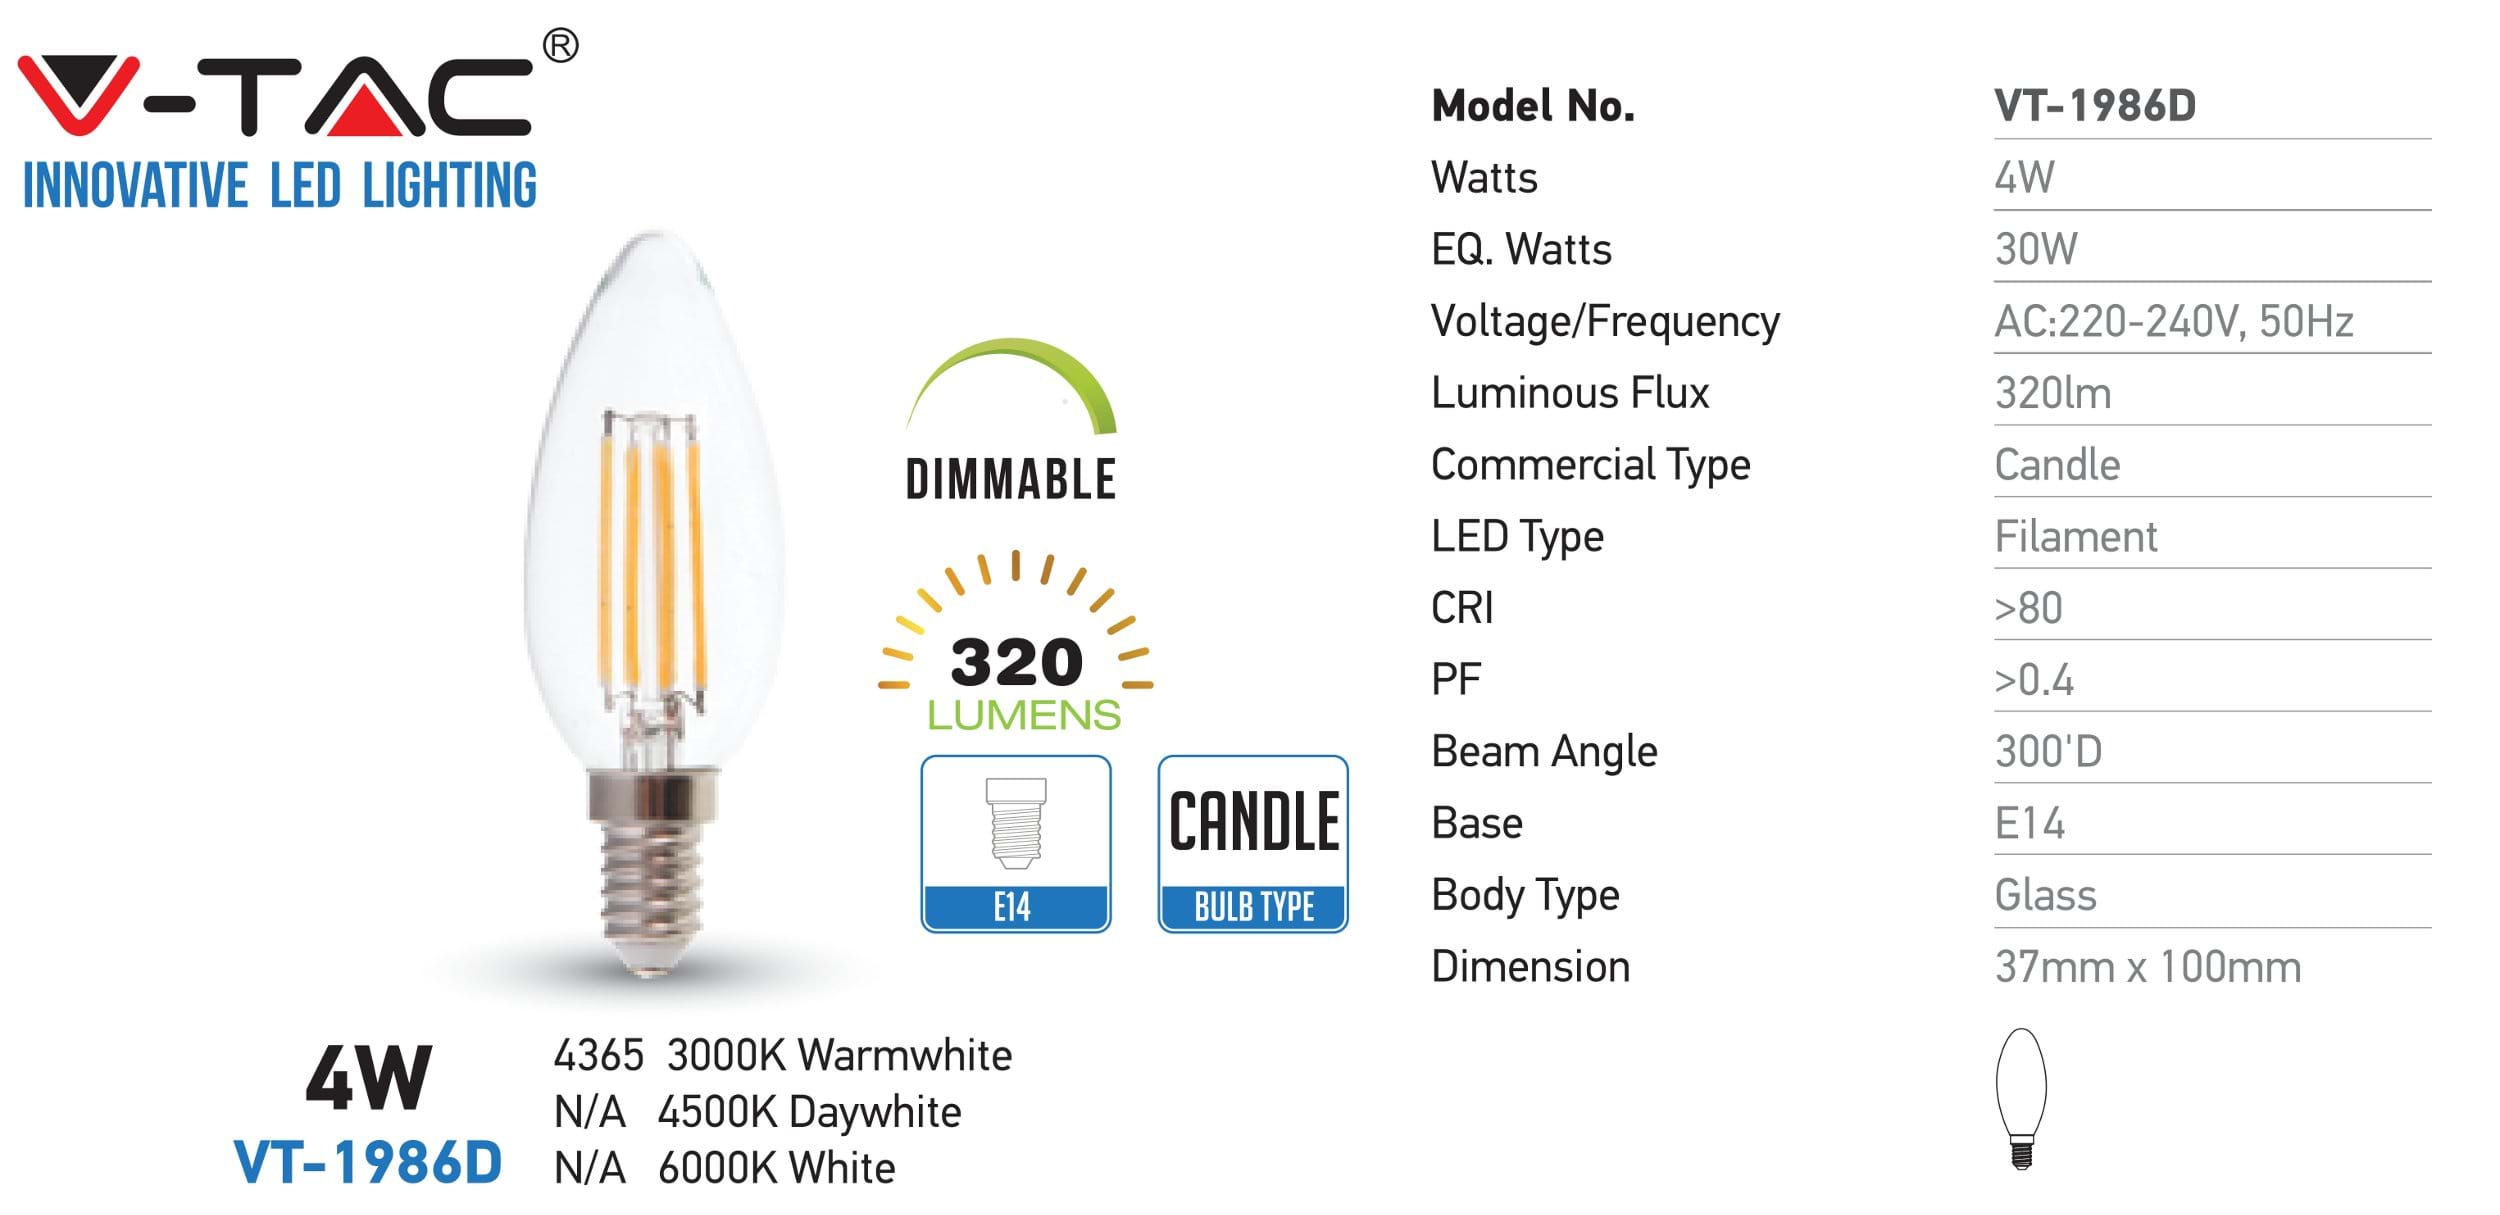 LAMPADINE LED E14 4W DIMMERABILE FILAMENTO V TAC VT-1986D 4365